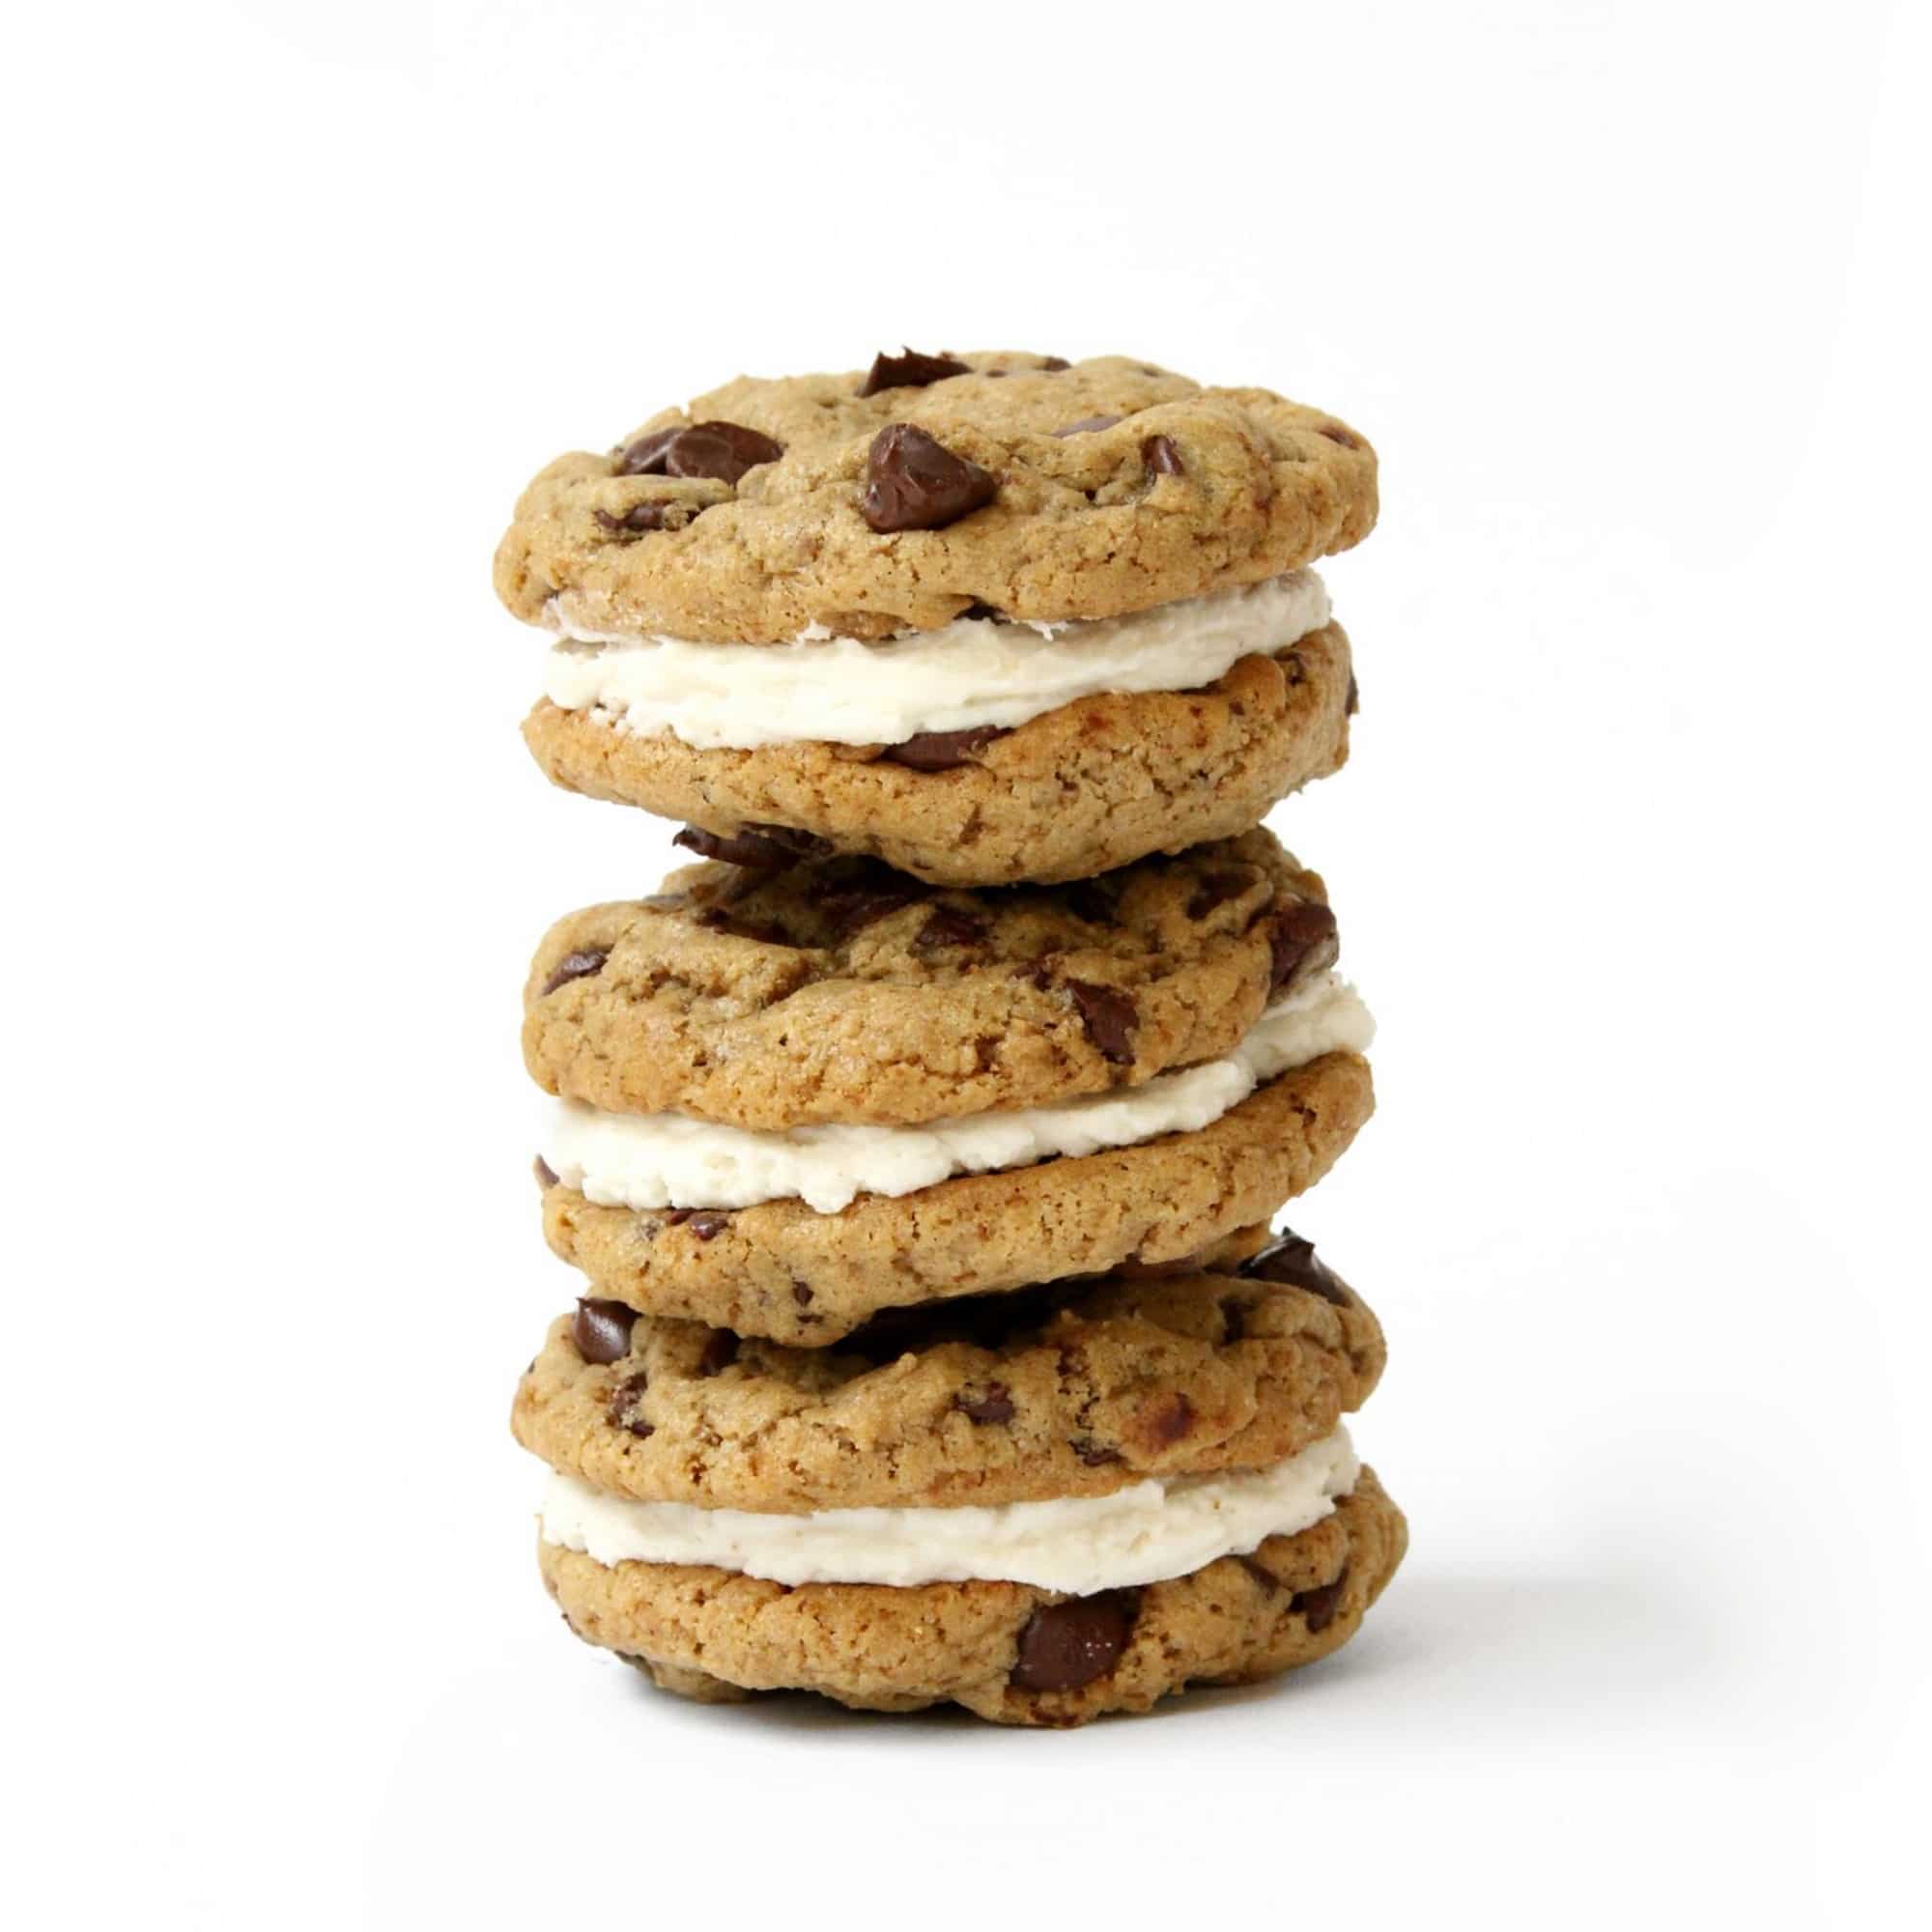 Organic Cookie Mix [Chocolate Chip] - Soft & Flavorful | Miss Jones®